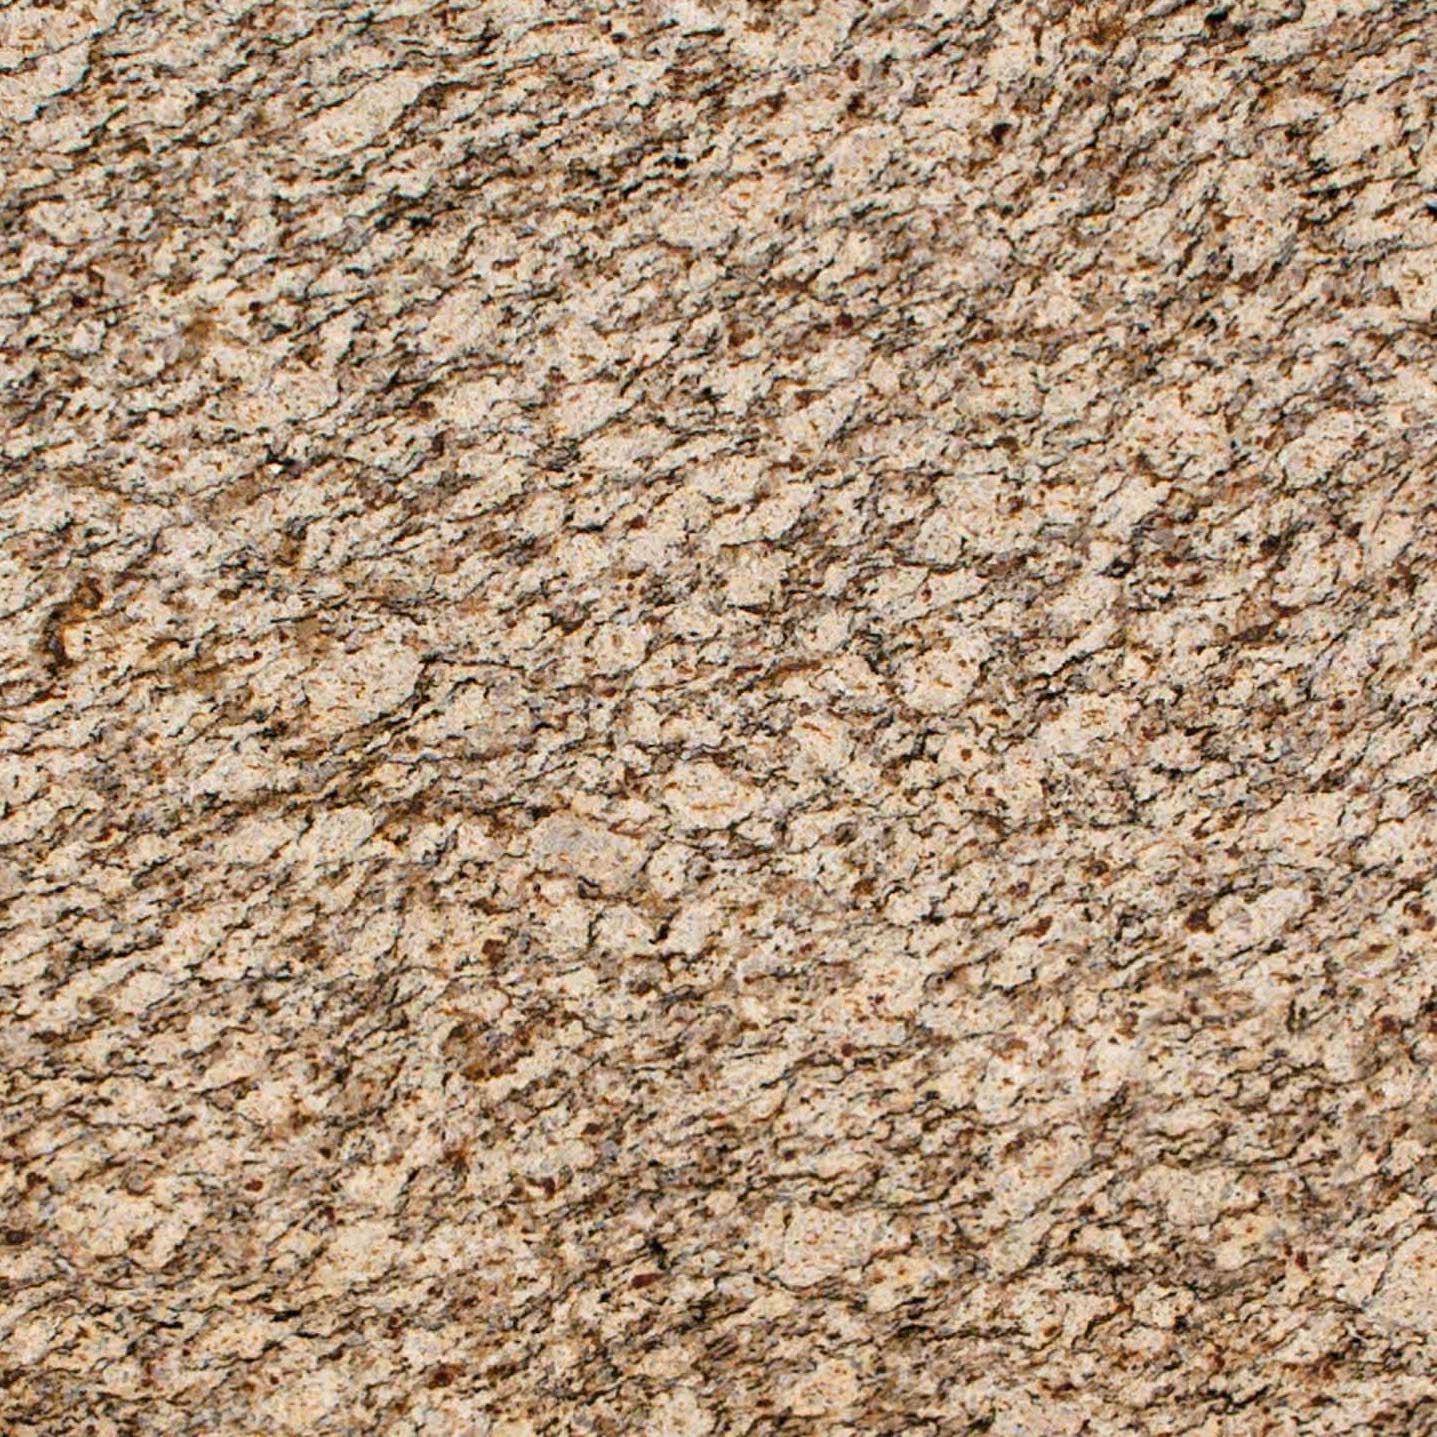 Santa Cecilia Granite countertops Savannah